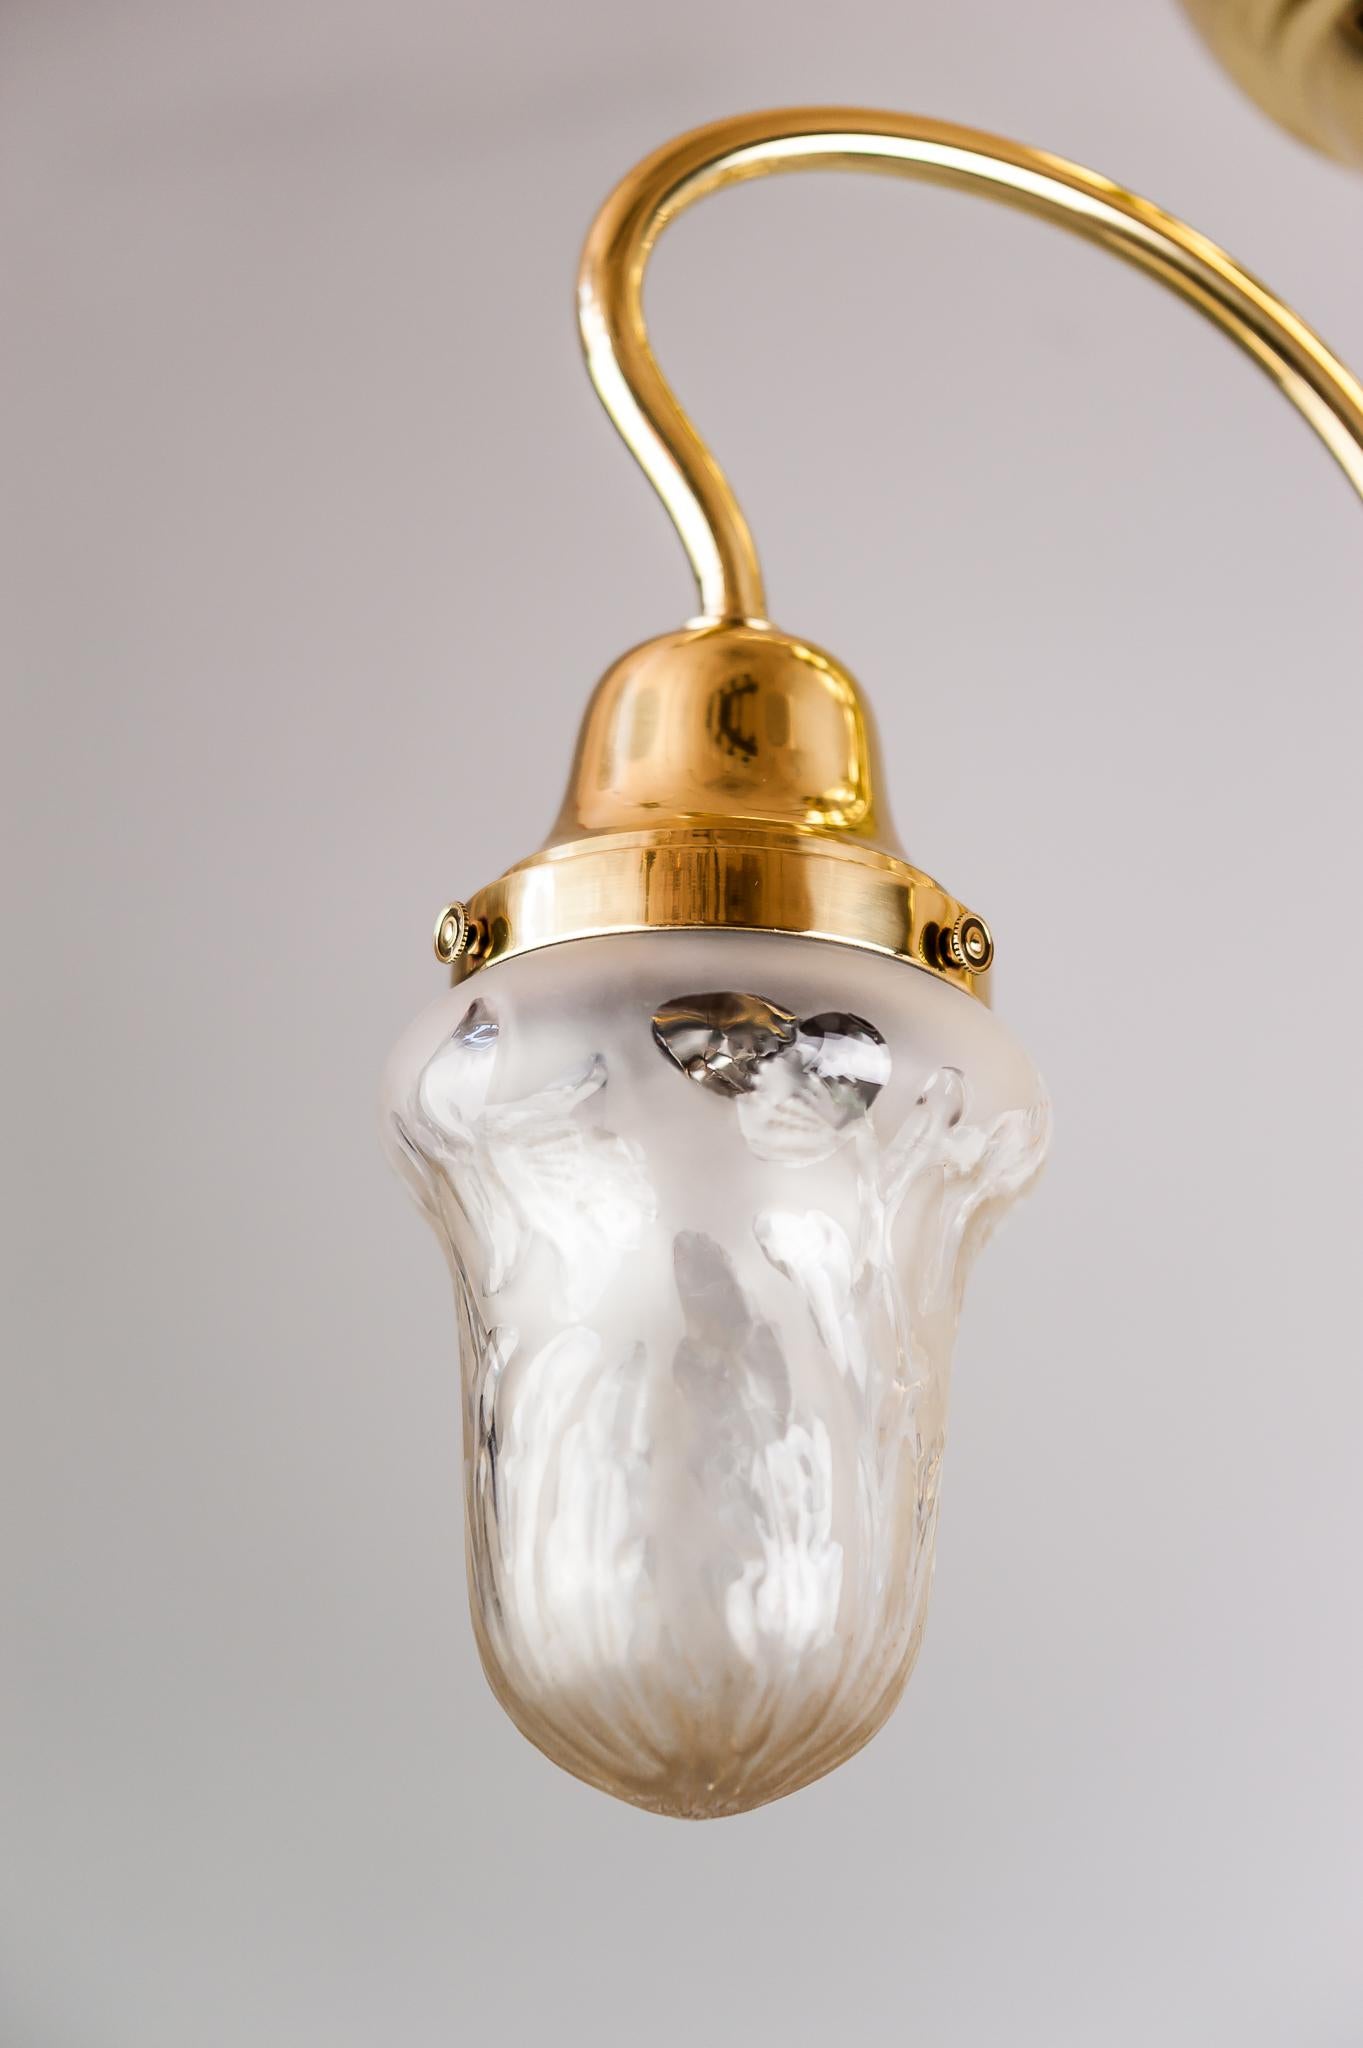 Austrian Jugendstil Ceiling Lamp, circa 1908 with Original Glass Shades